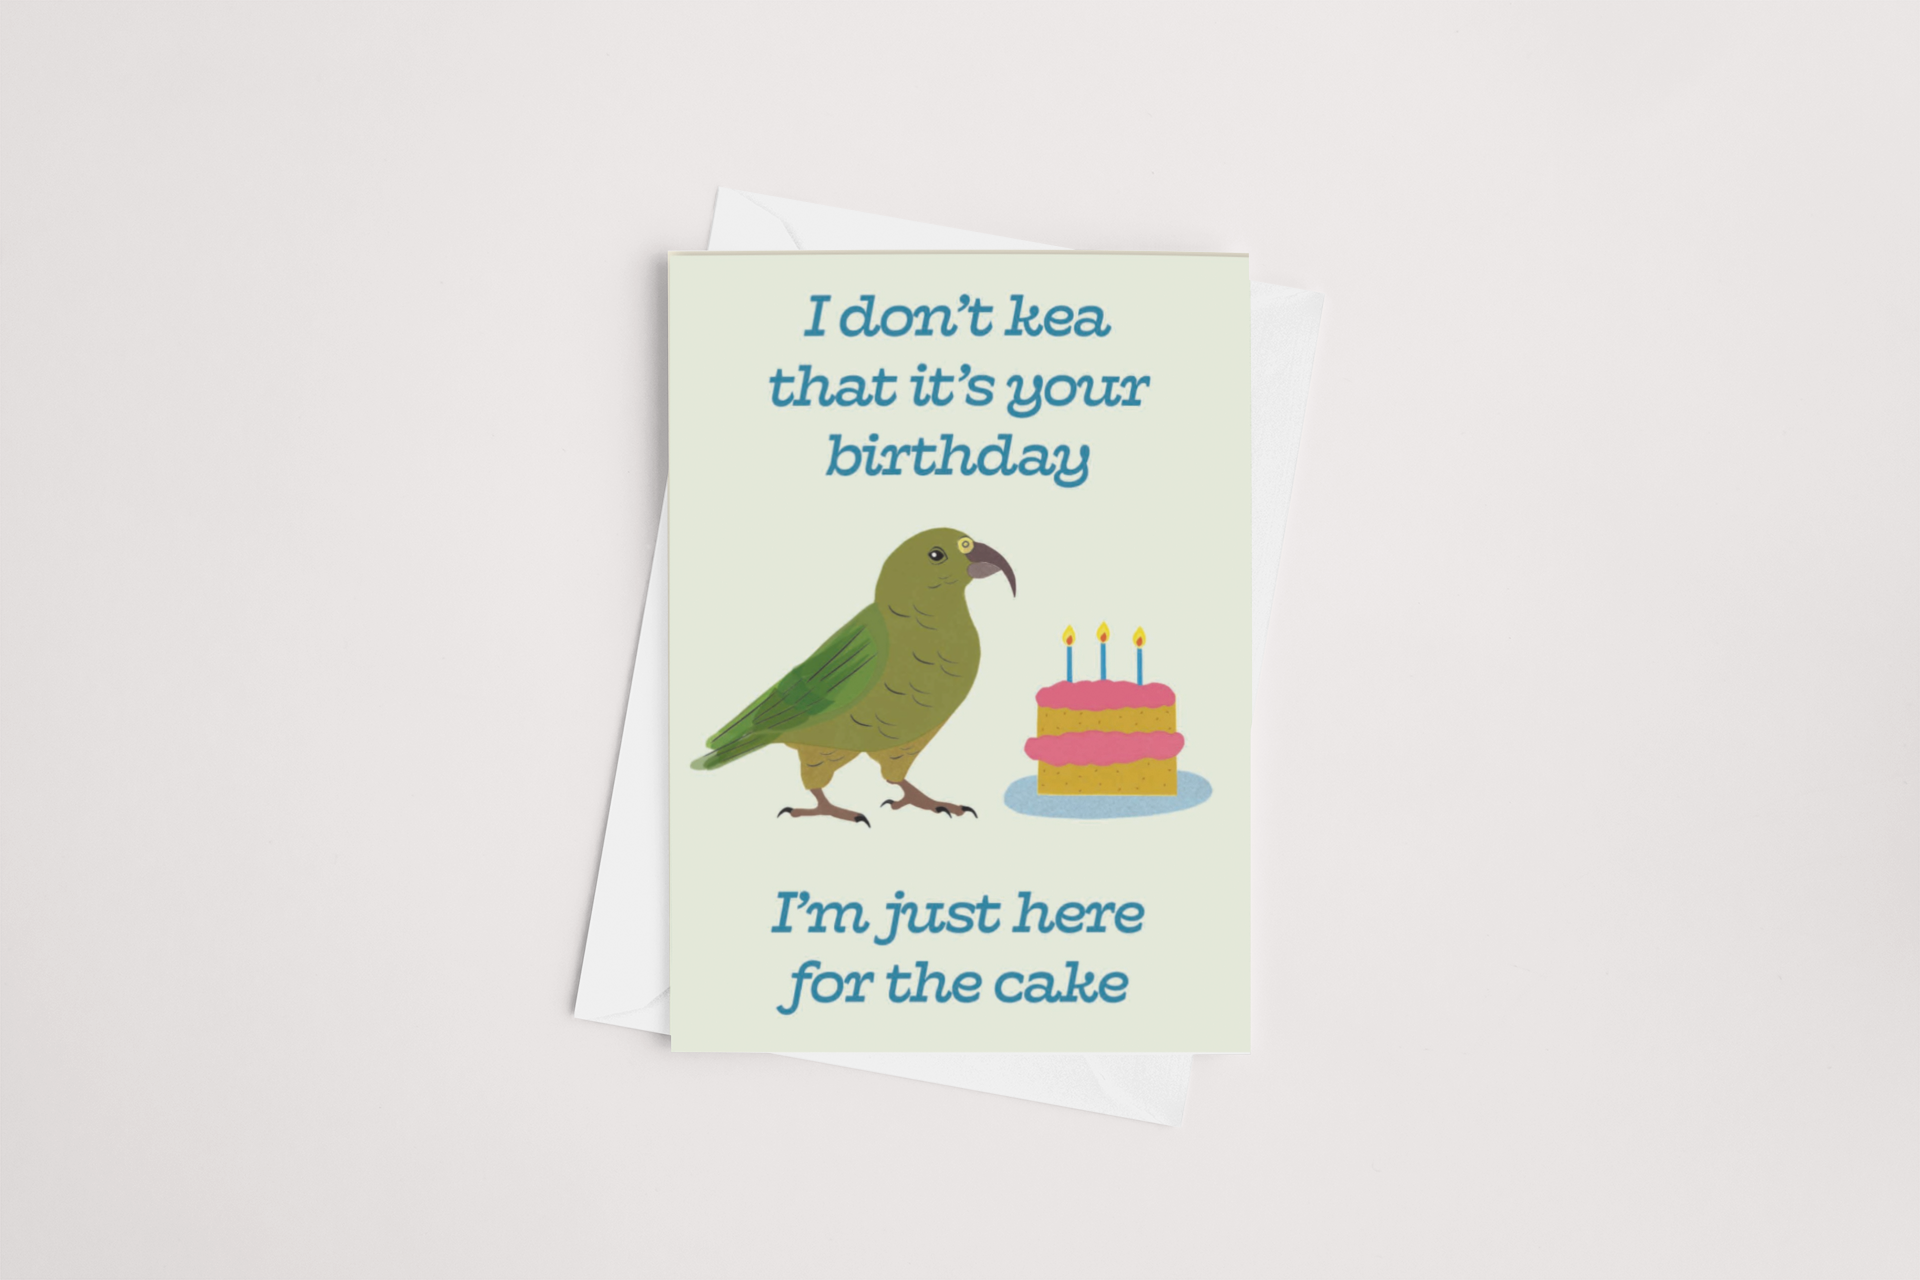 cheeky kea bird birthday greeting card